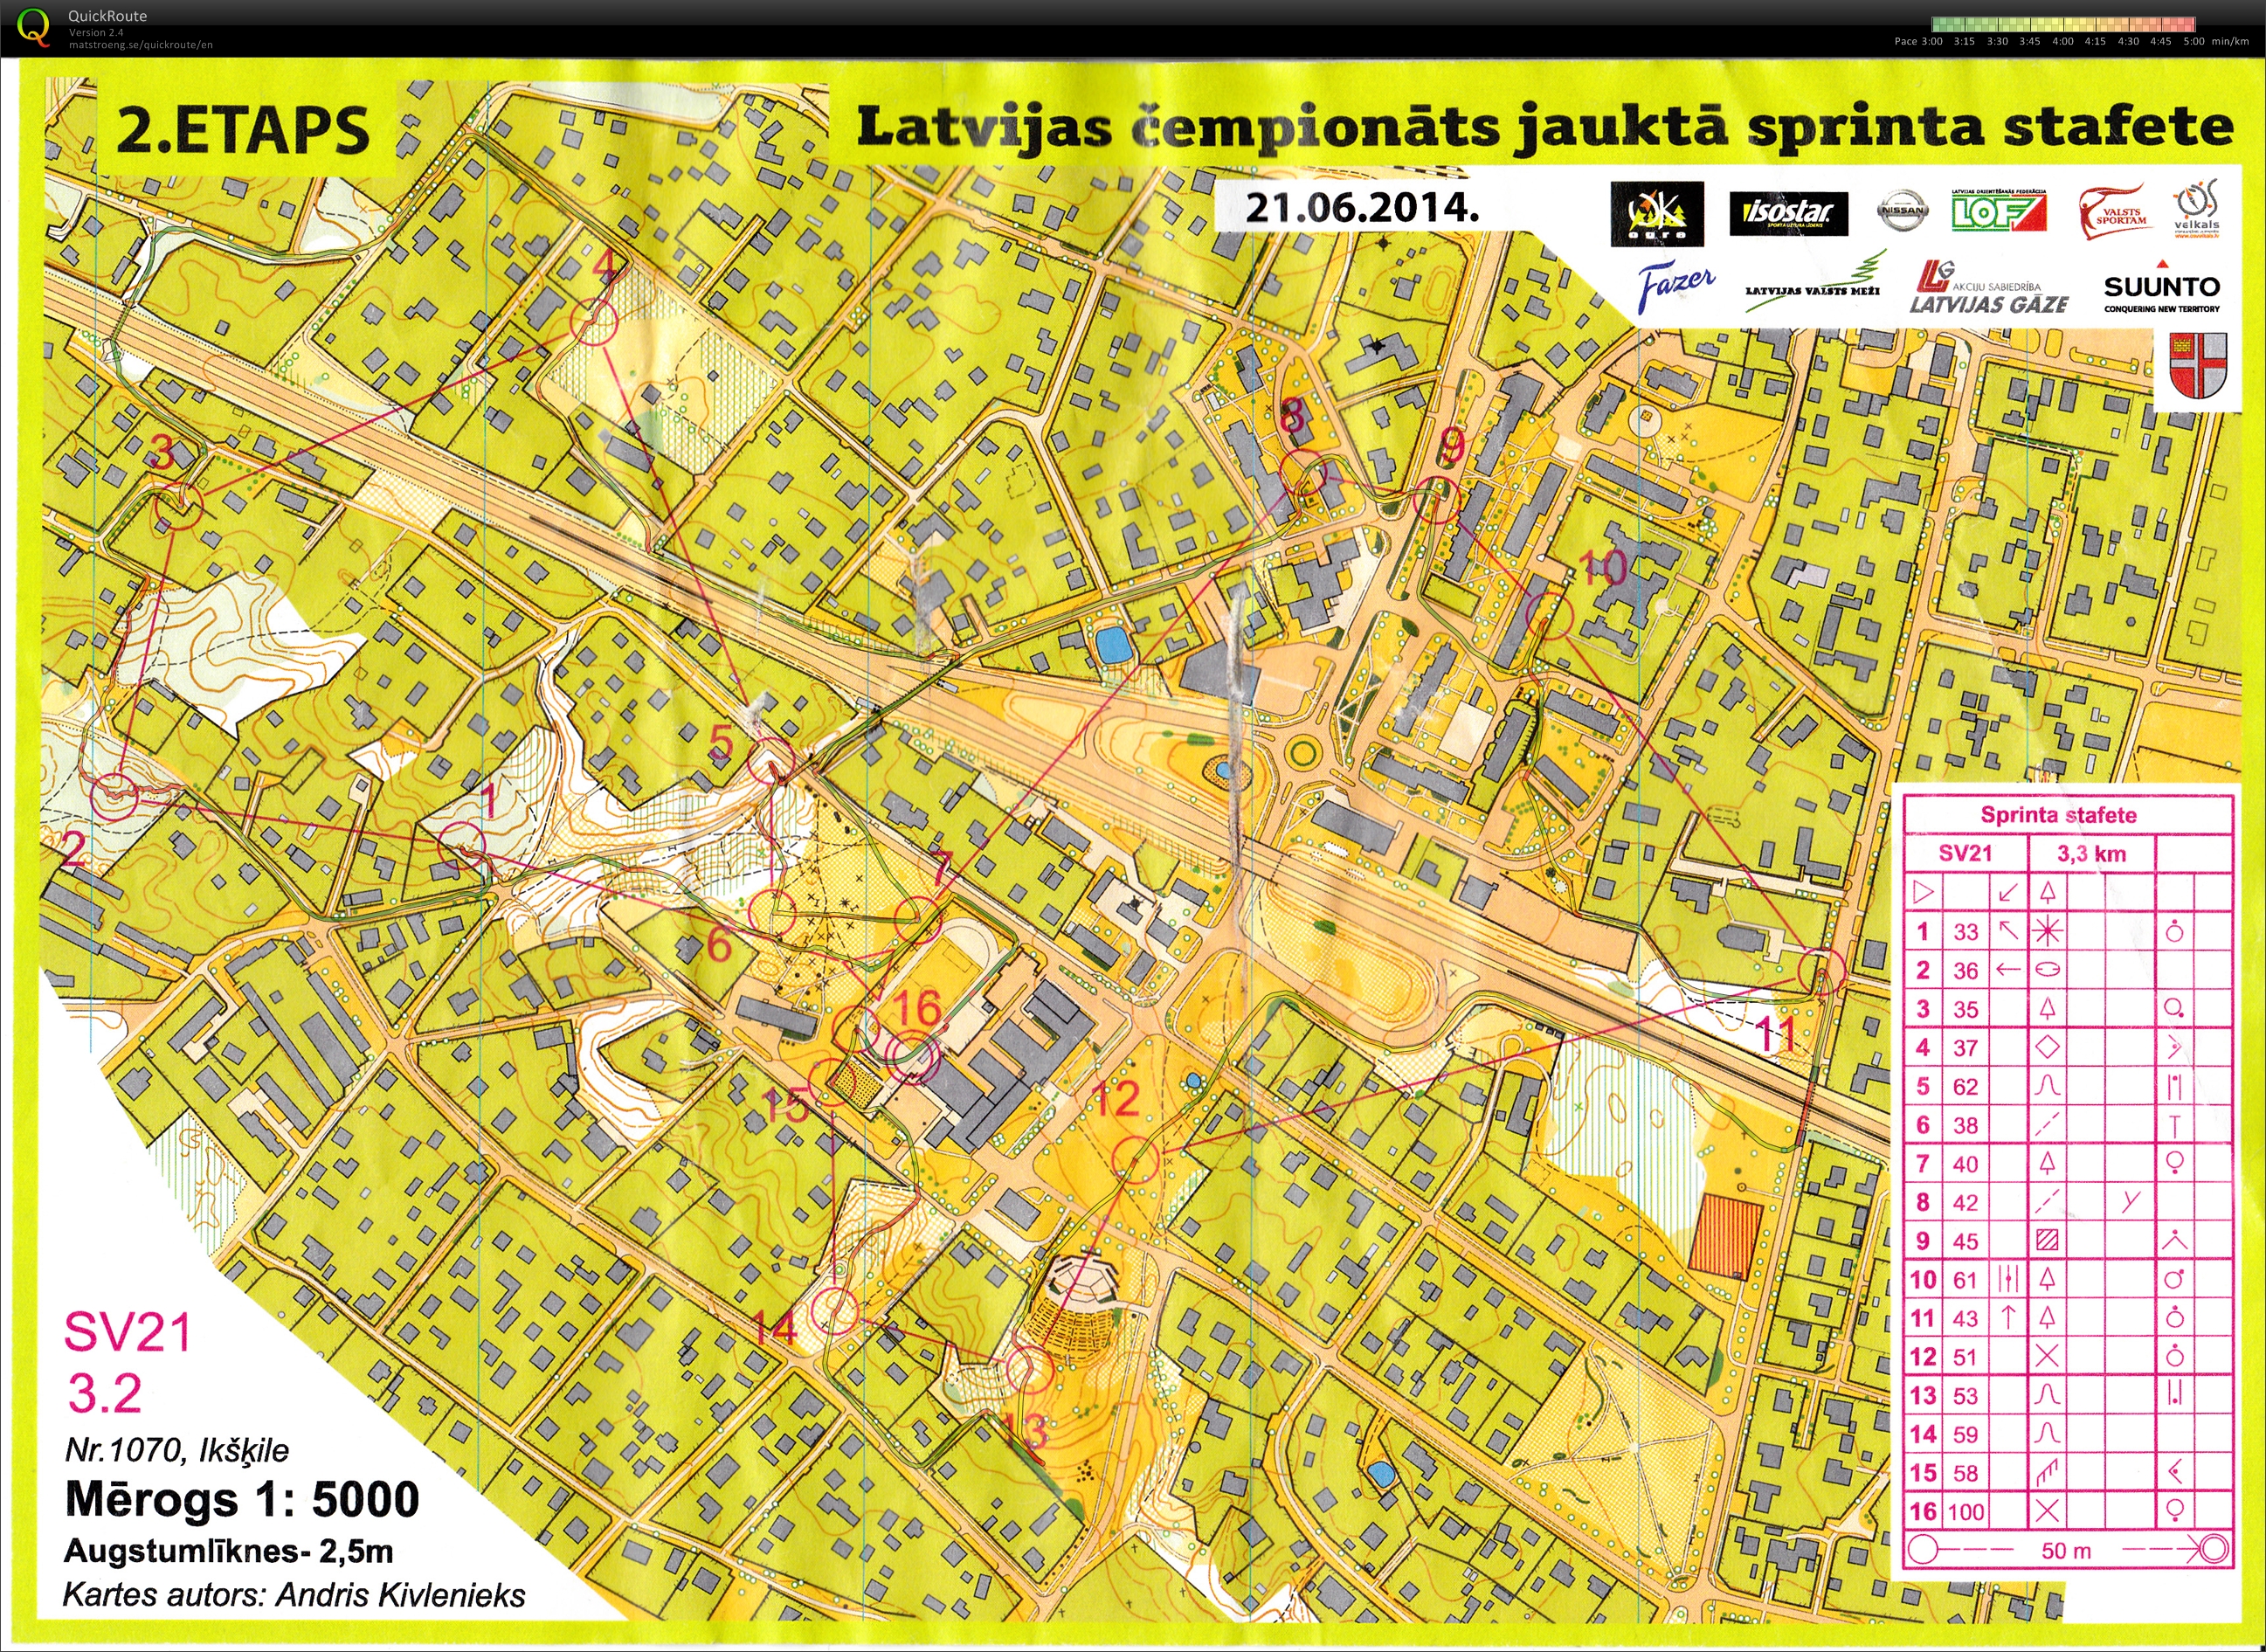 Latvian Mixed Sprint relay championships (2014-06-21)